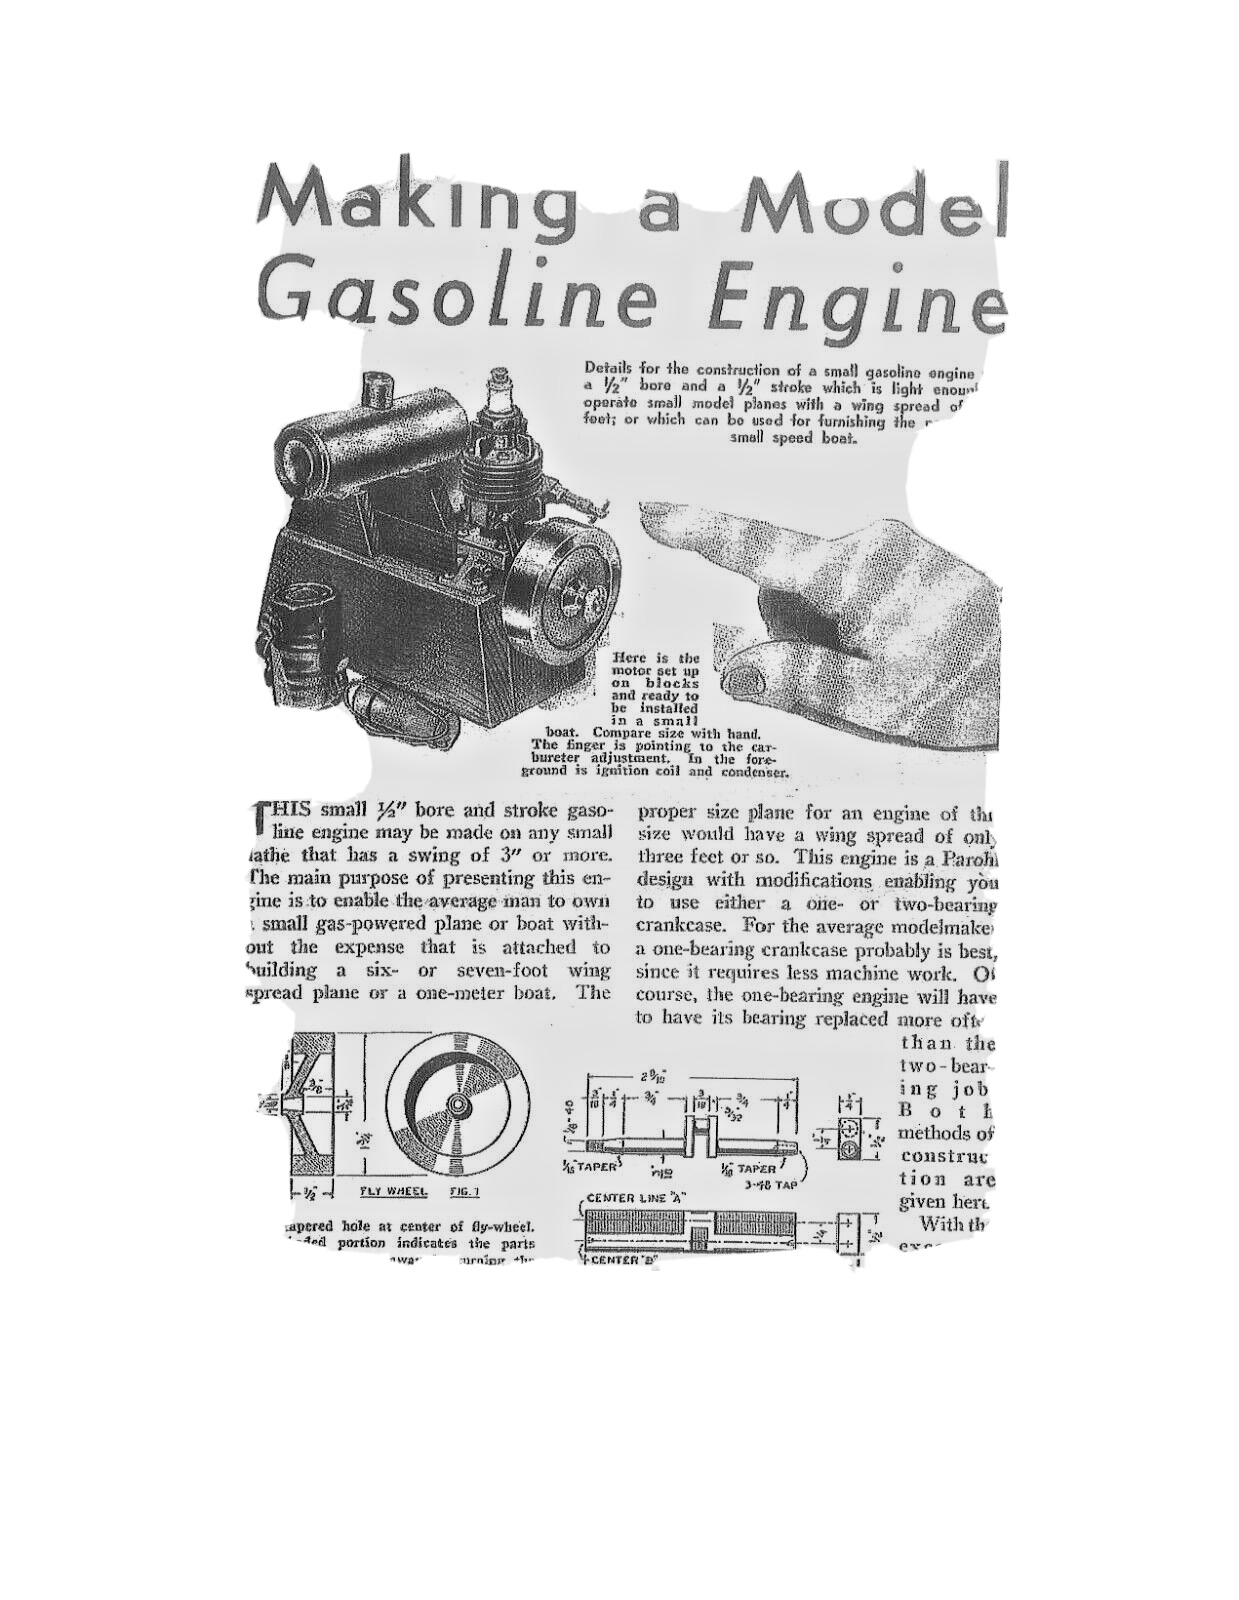 Make a model gasoline engine, paper copies of a 1940's original magazine article